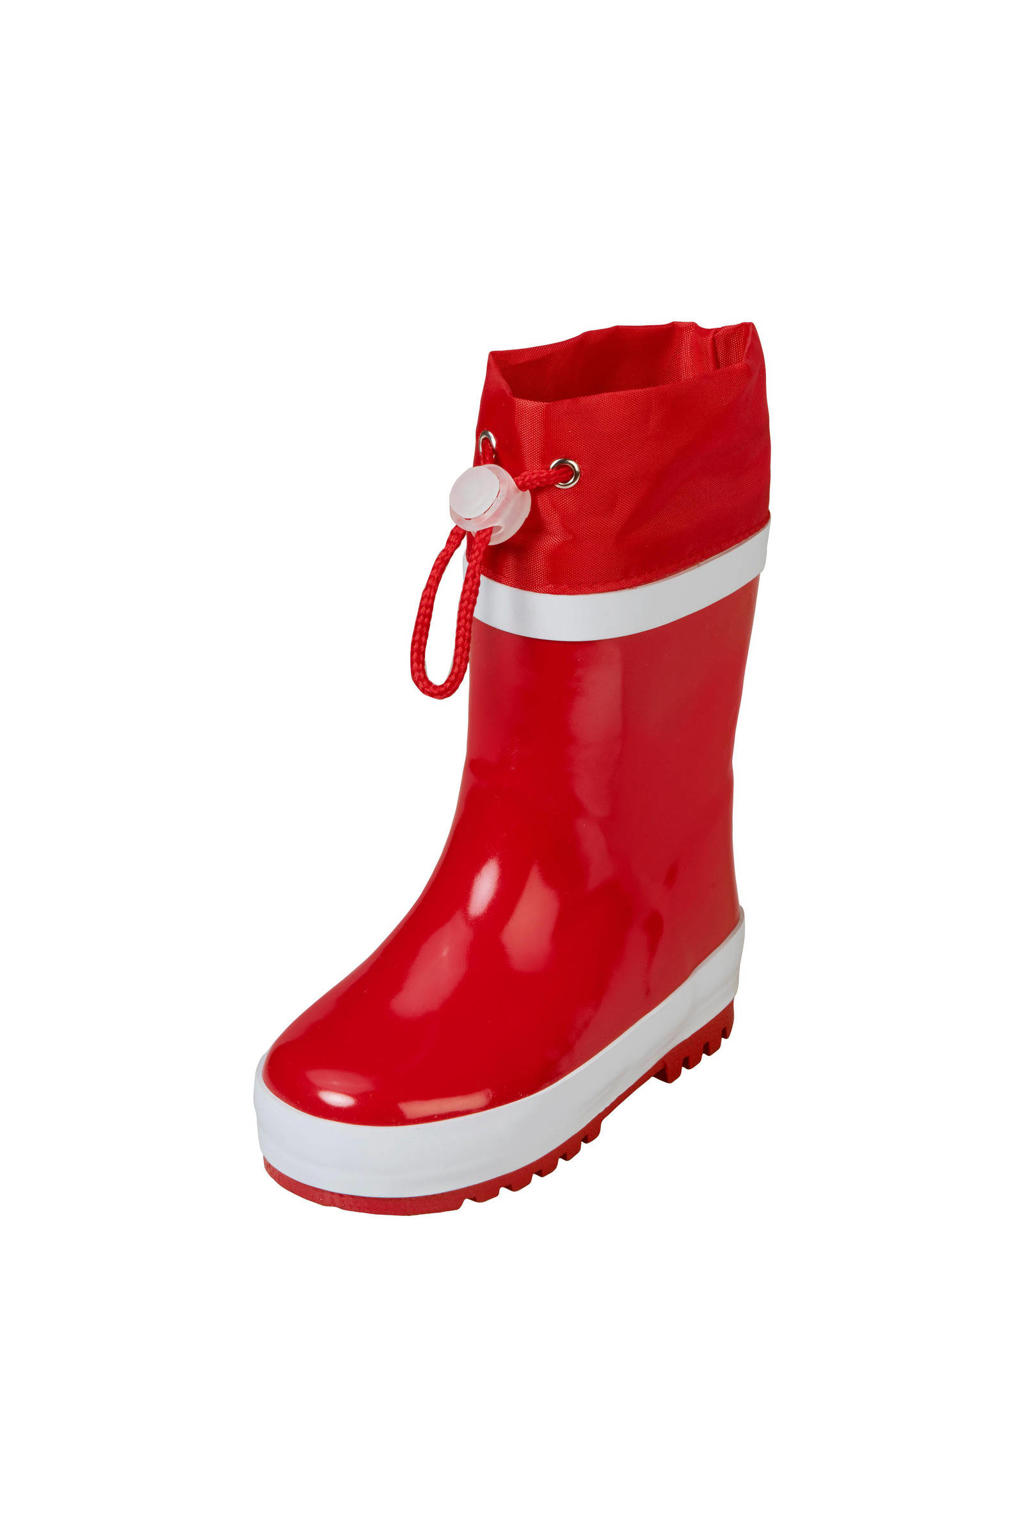 Playshoes Basic  gevoerde regenlaarzen rood kids